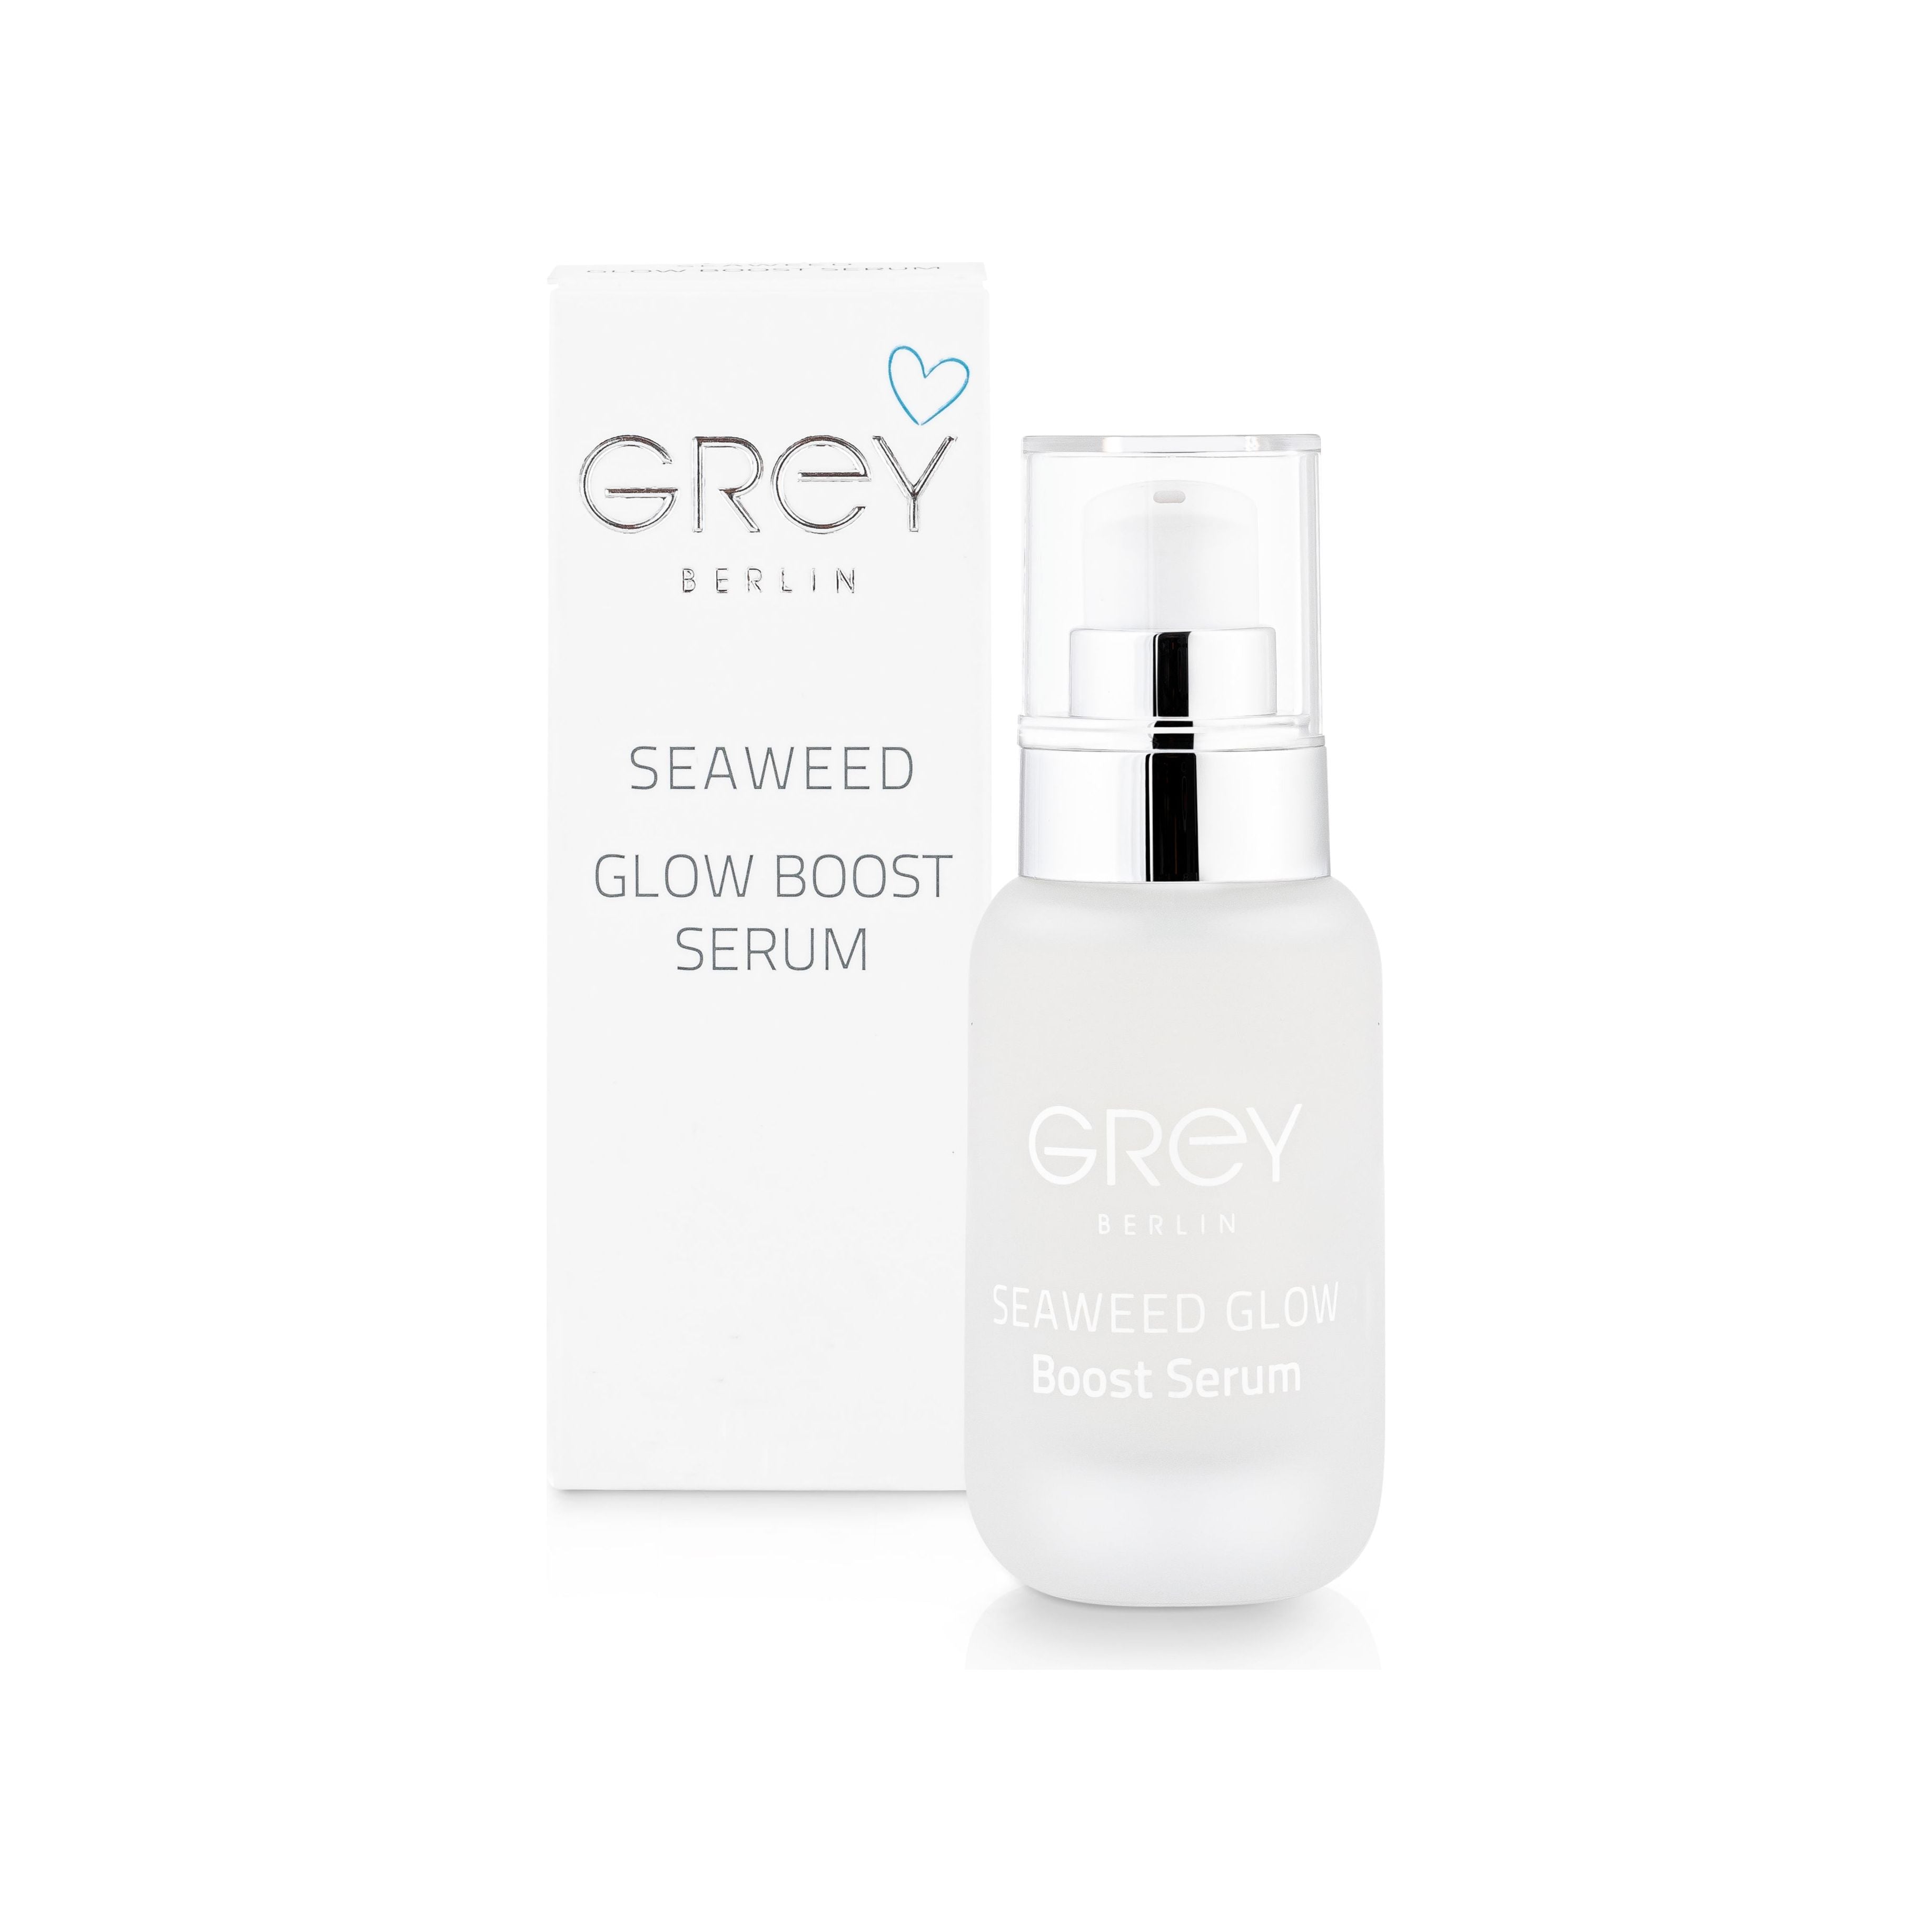 Grey - Seaweed Glow Boost Serum - Gesichtsserum